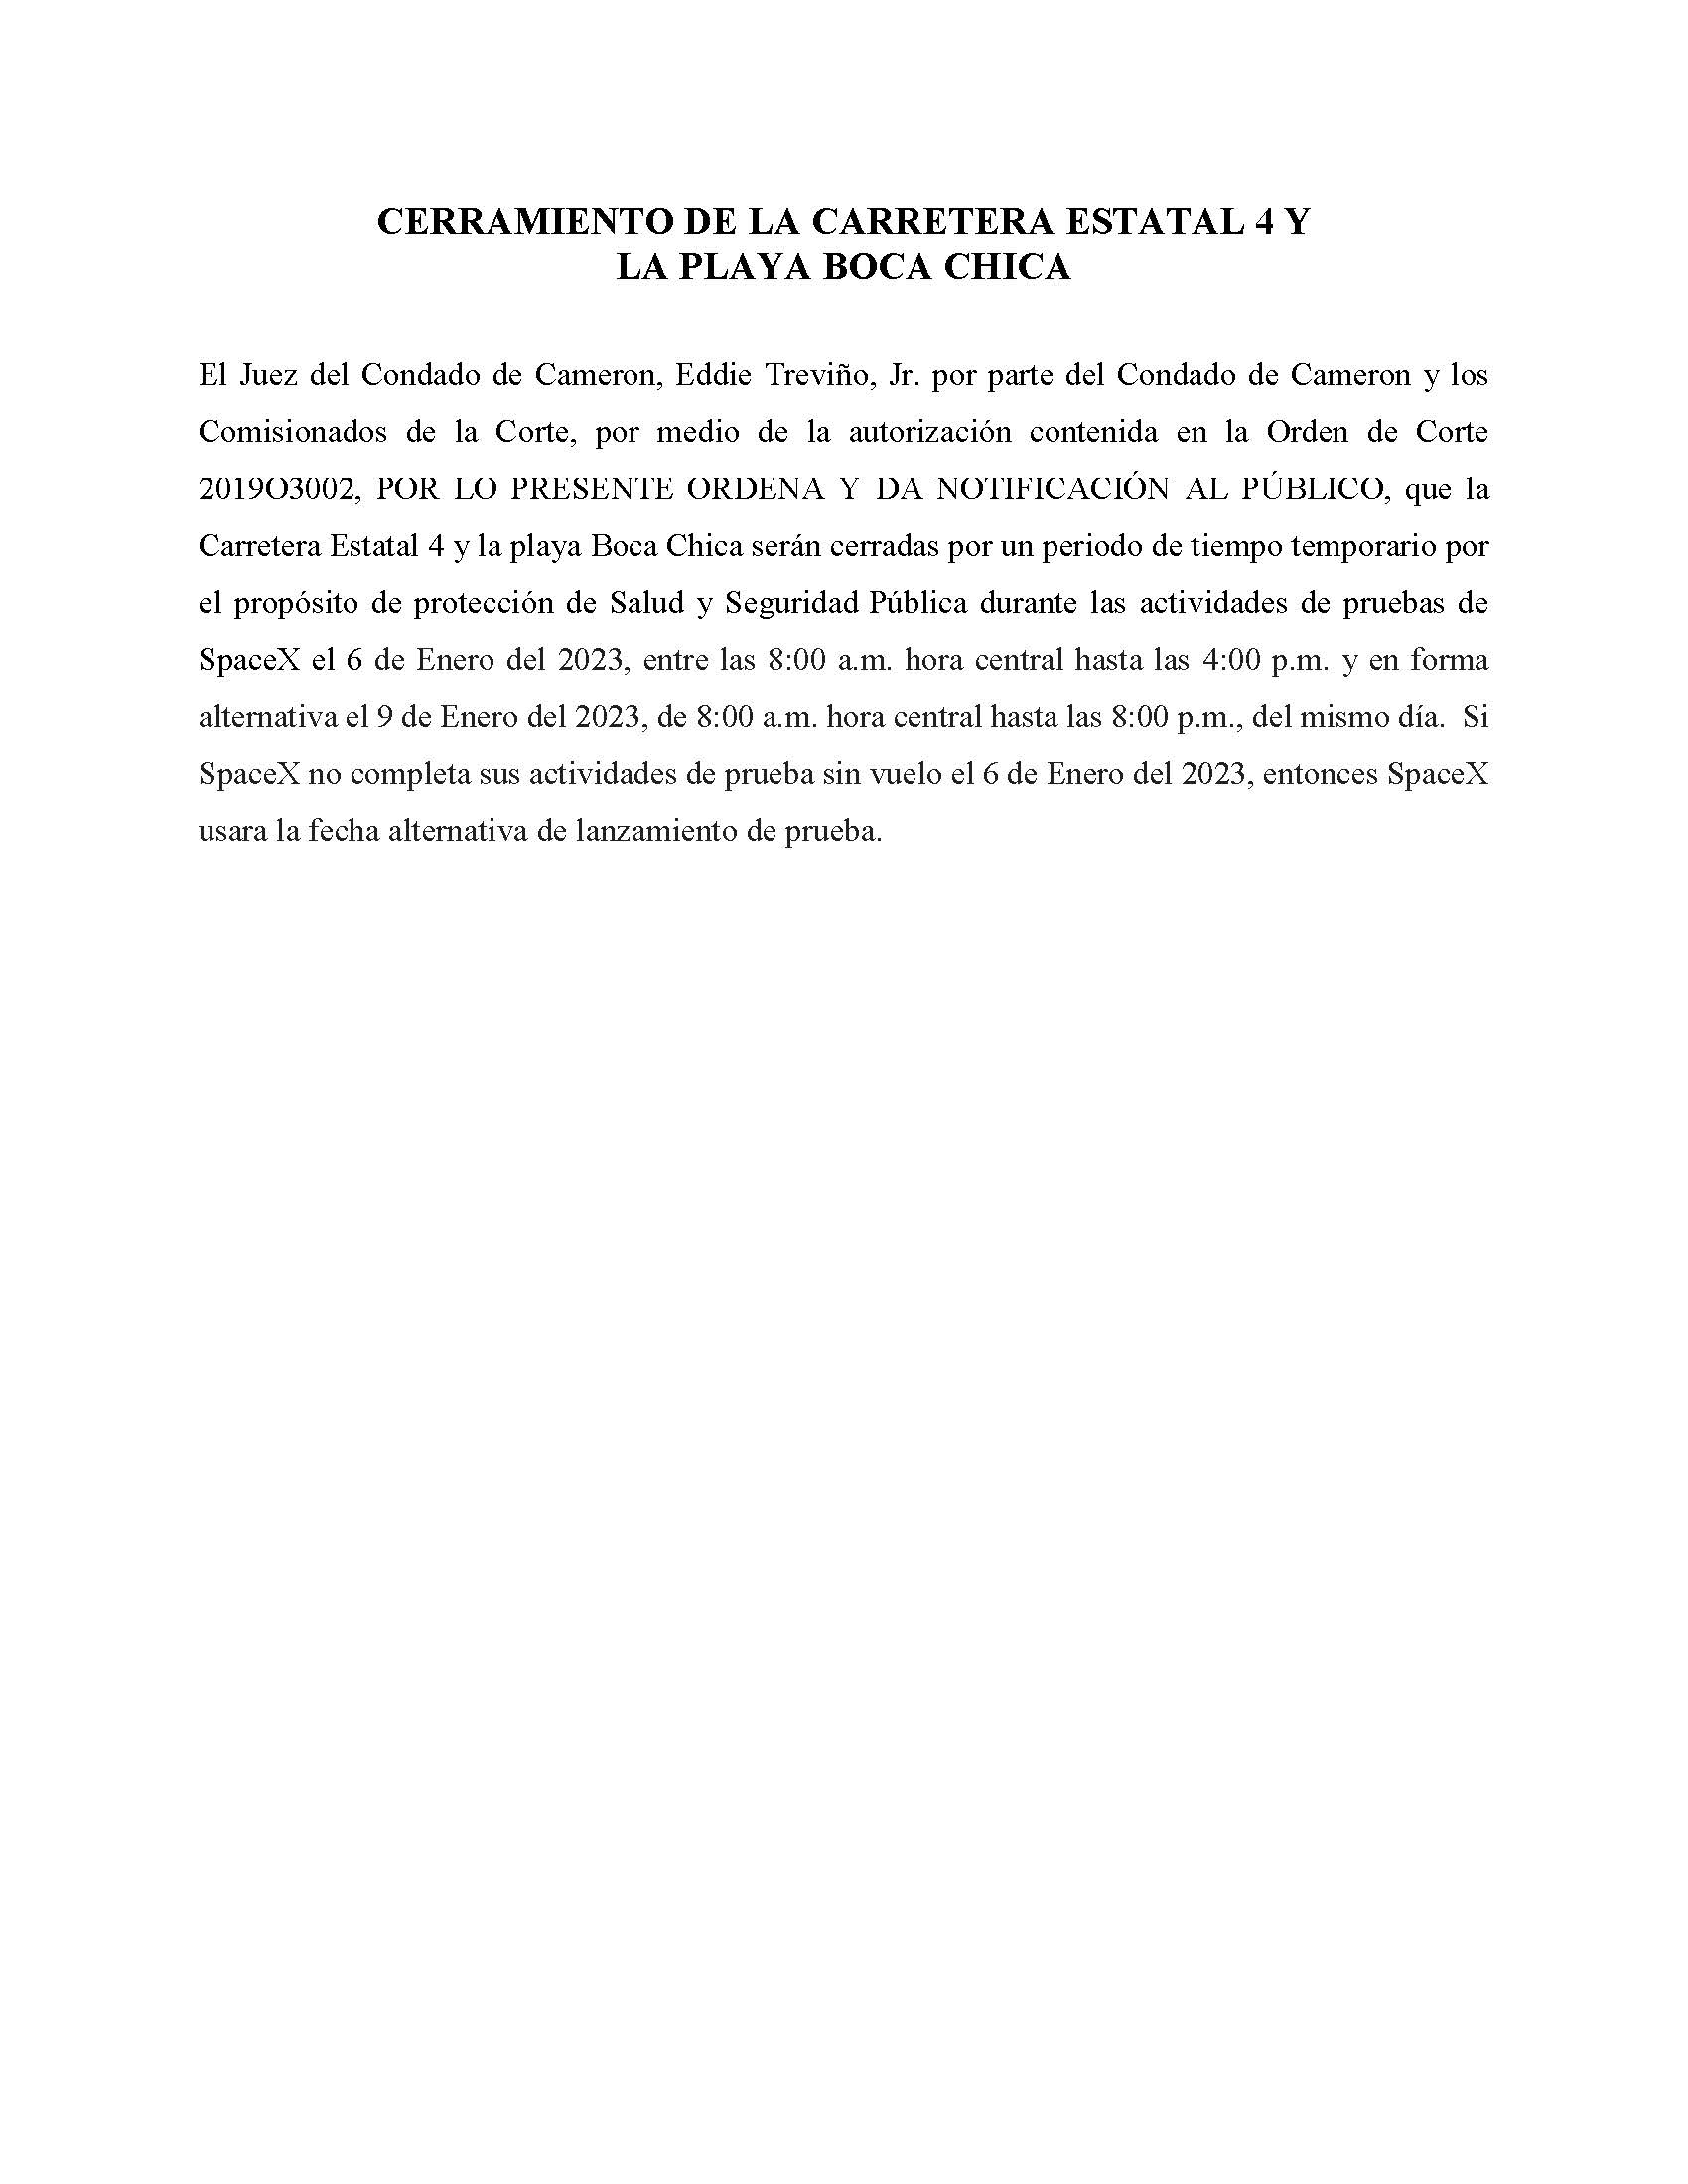 ORDER.CLOSURE OF HIGHWAY 4 Y LA PLAYA BOCA CHICA.SPANISH.01.06.23